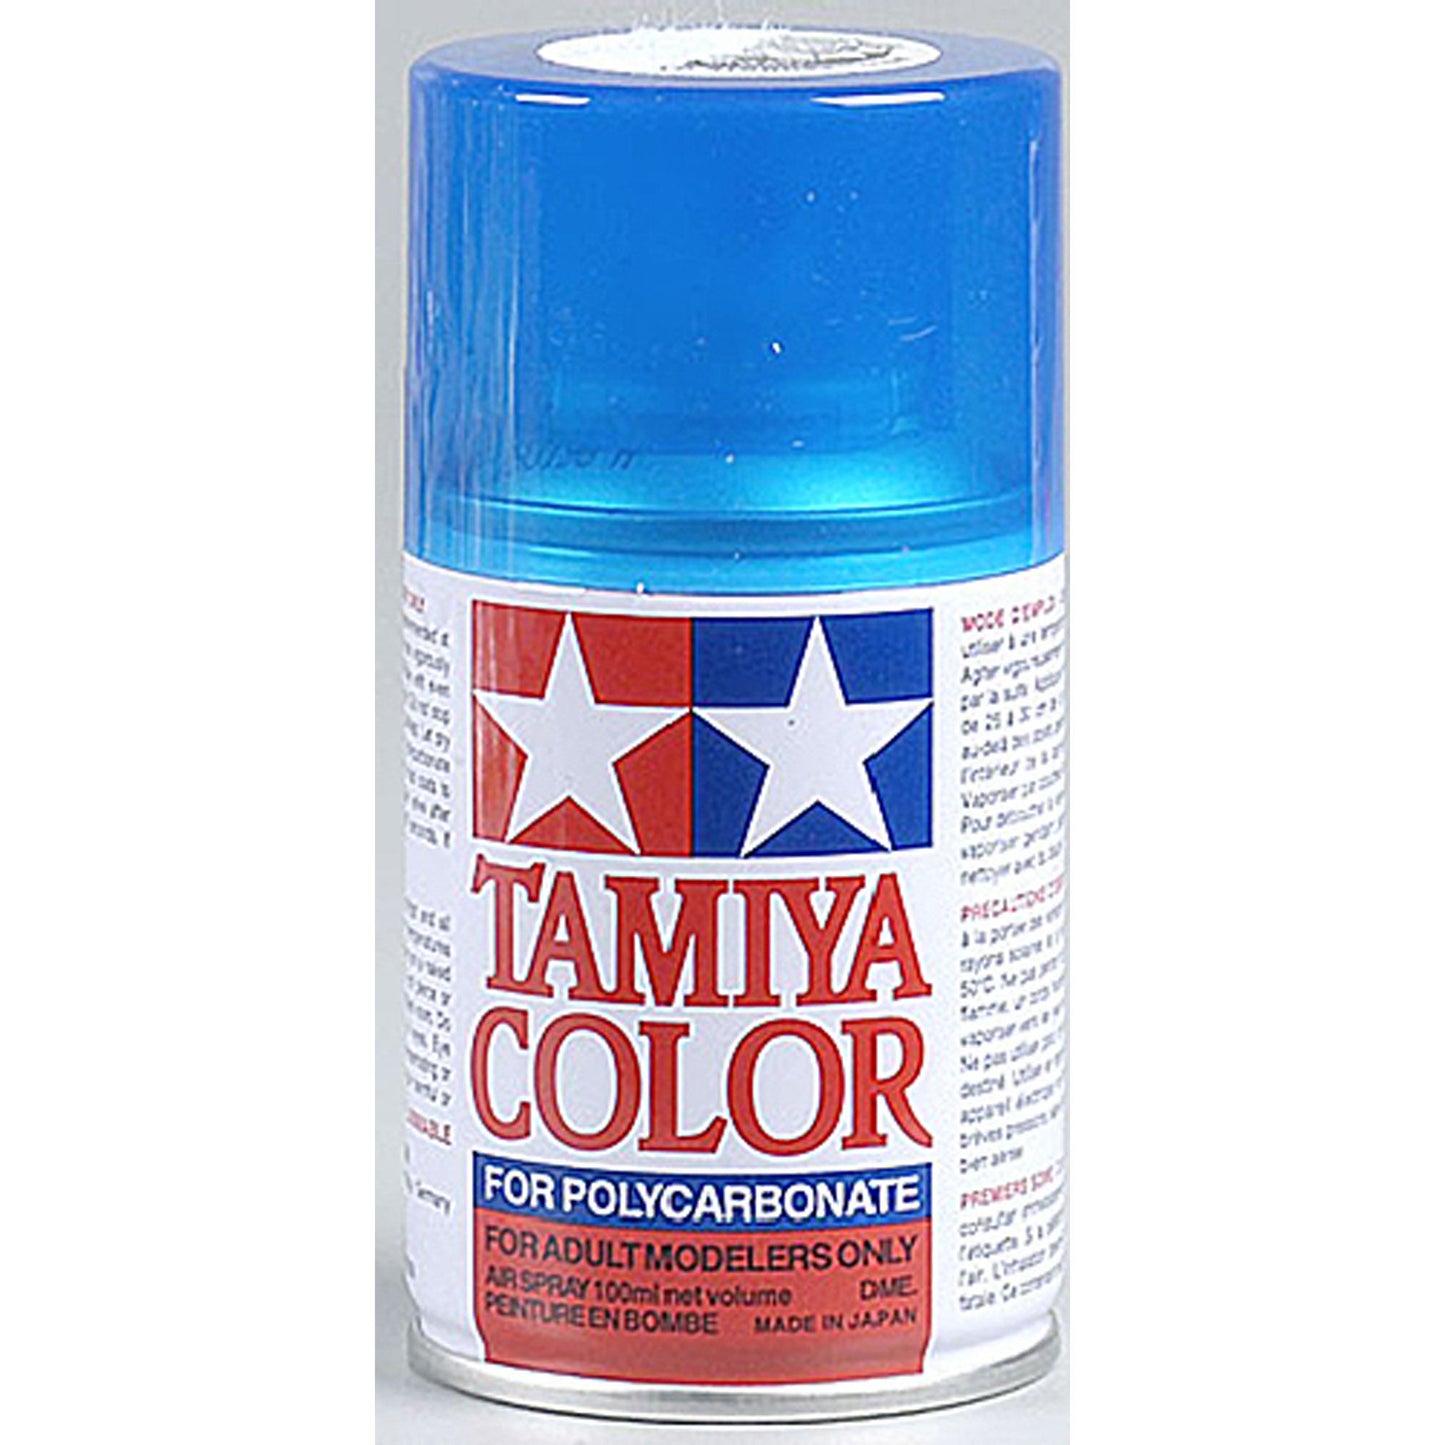 Tamiya Polycarbonate PS-39 Translucent Light Blue